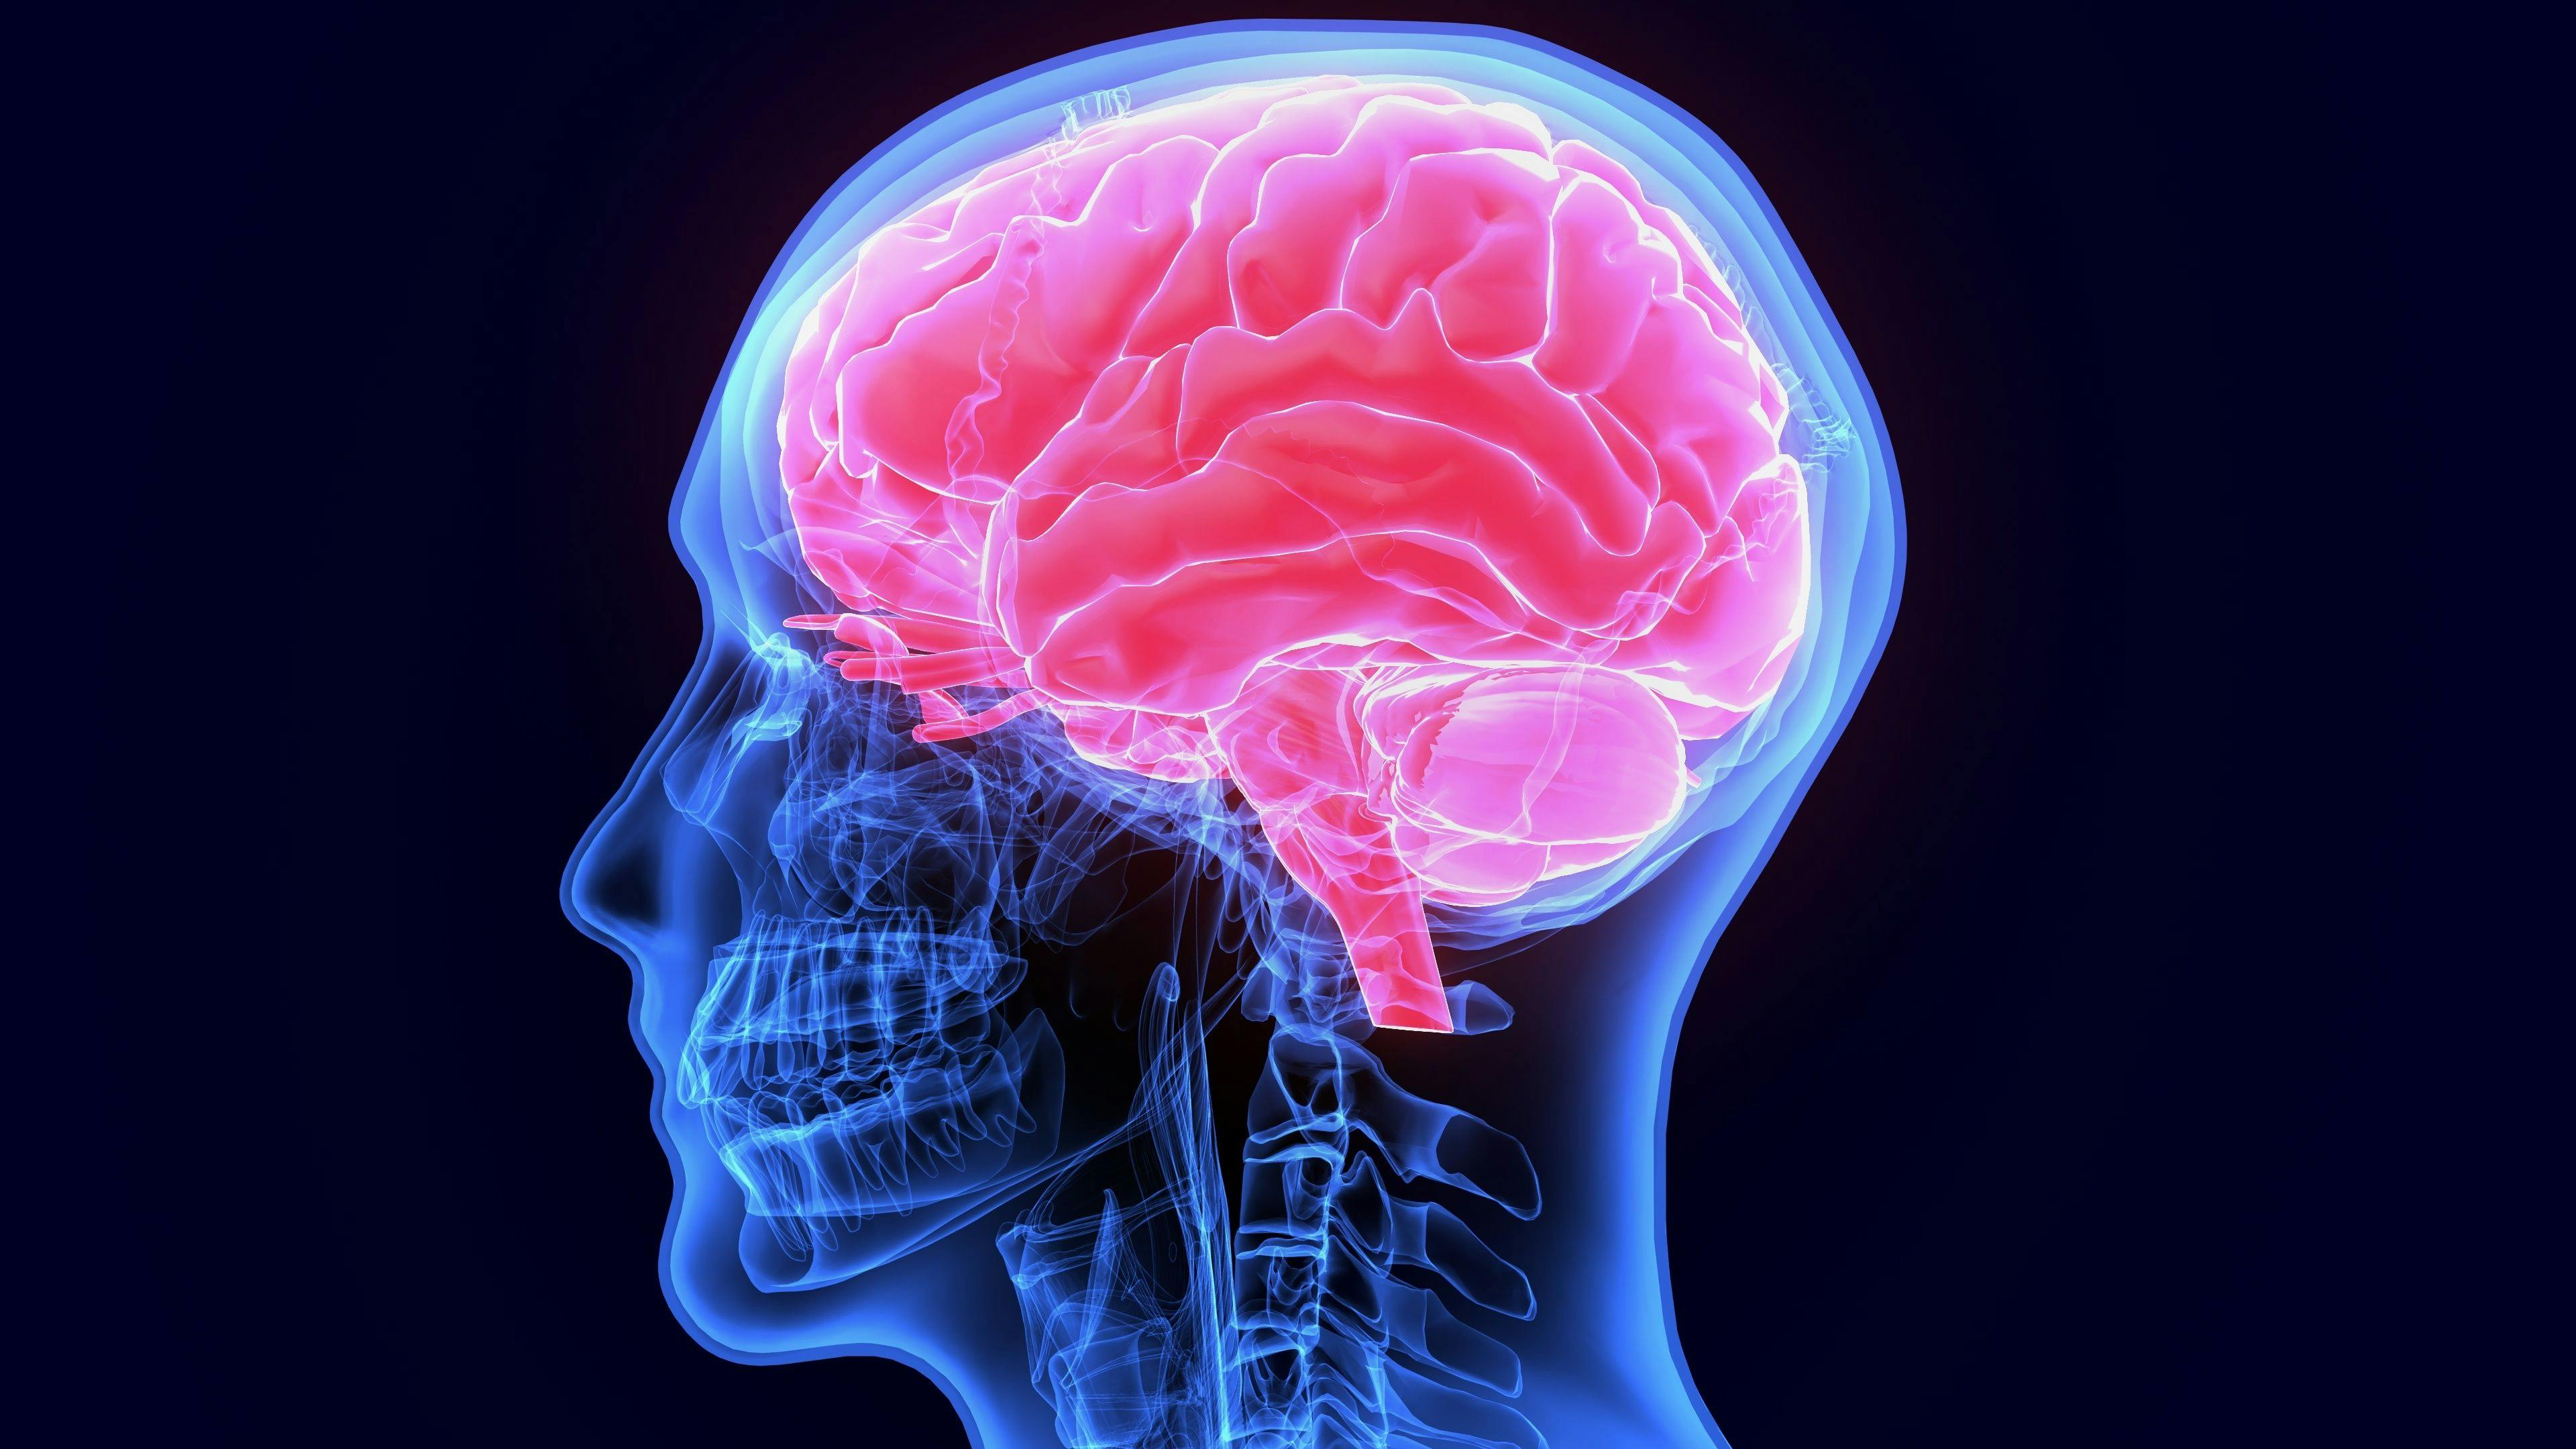 3d illustration of human body organ(brain anatomy): © PIC4U - stock.adobe.com